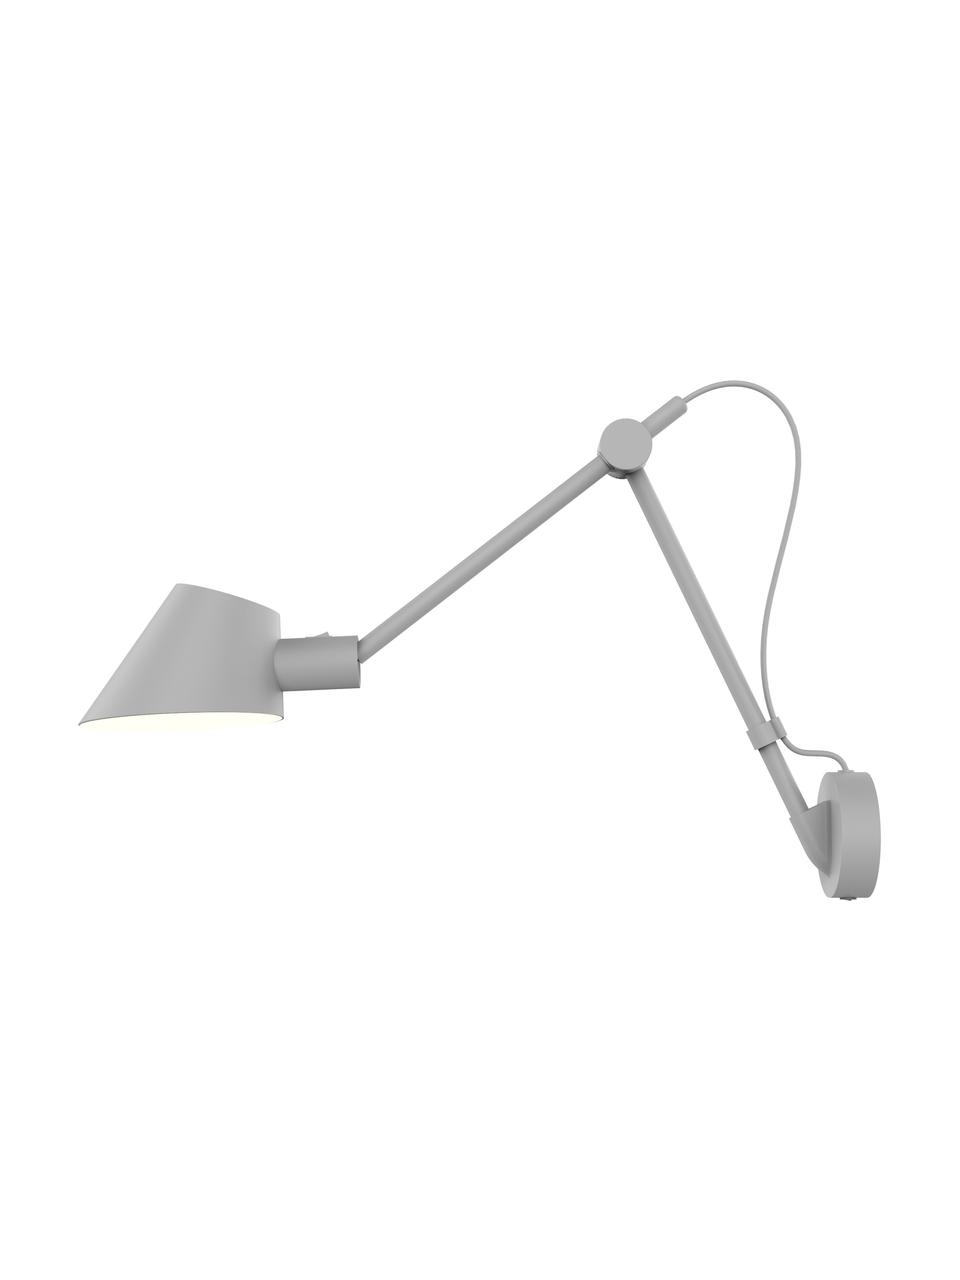 Grote wandlamp Stay met stekker, Lampenkap: gecoat metaal, Grijs, 72 x 55 cm